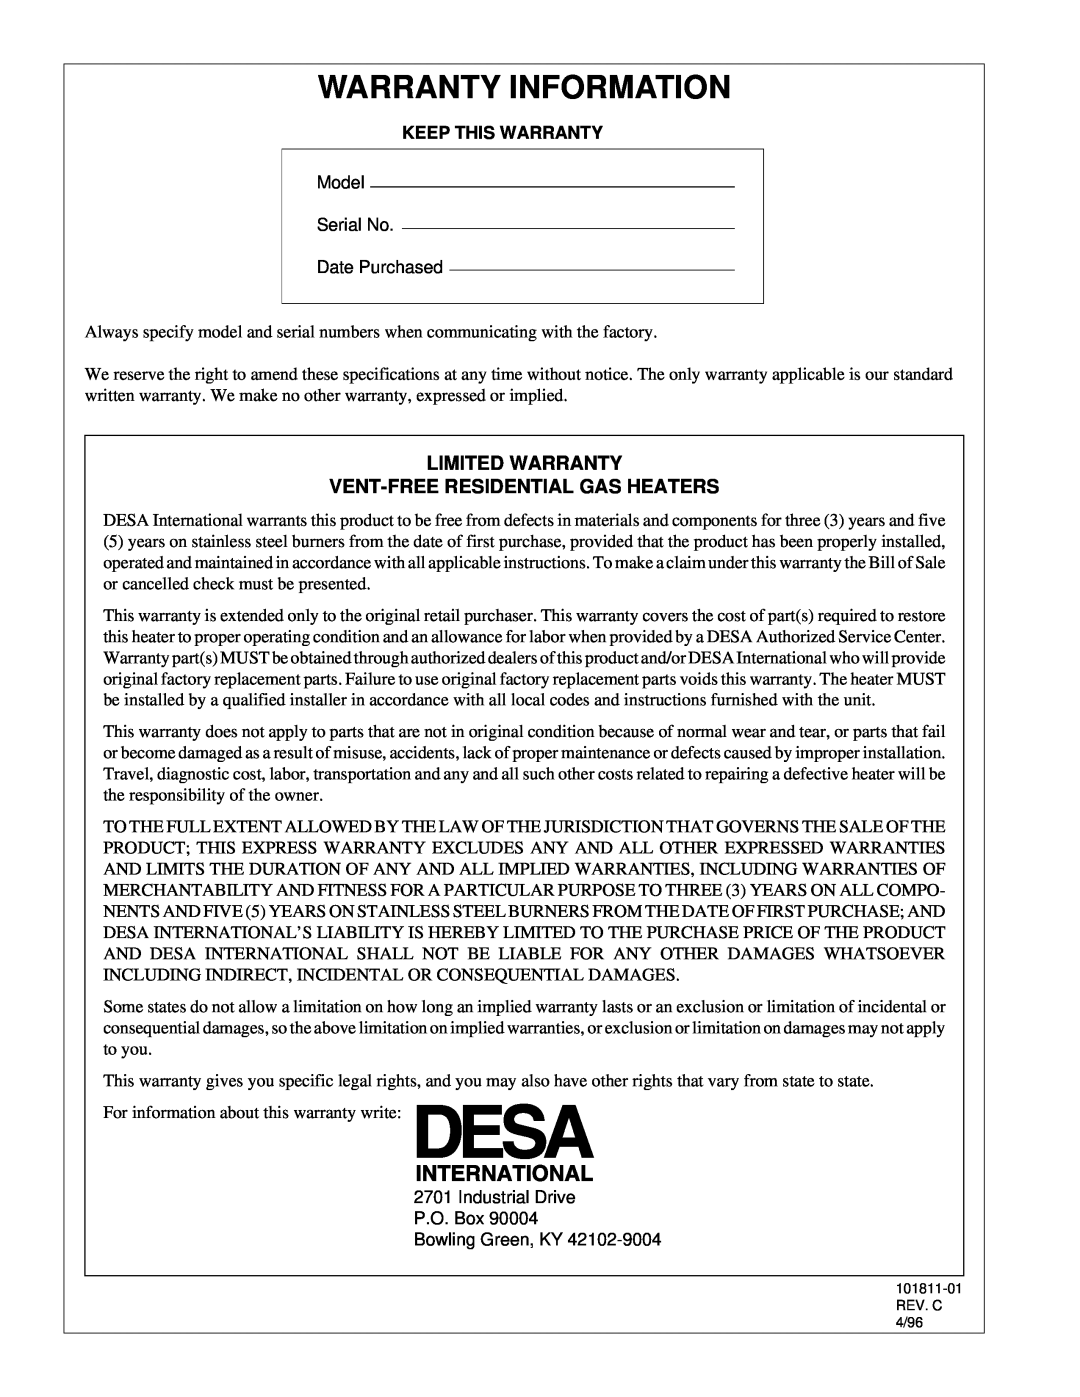 Desa 101811-01C.pdf installation manual Warranty Information, Limited Warranty Vent-Freeresidential Gas Heaters 